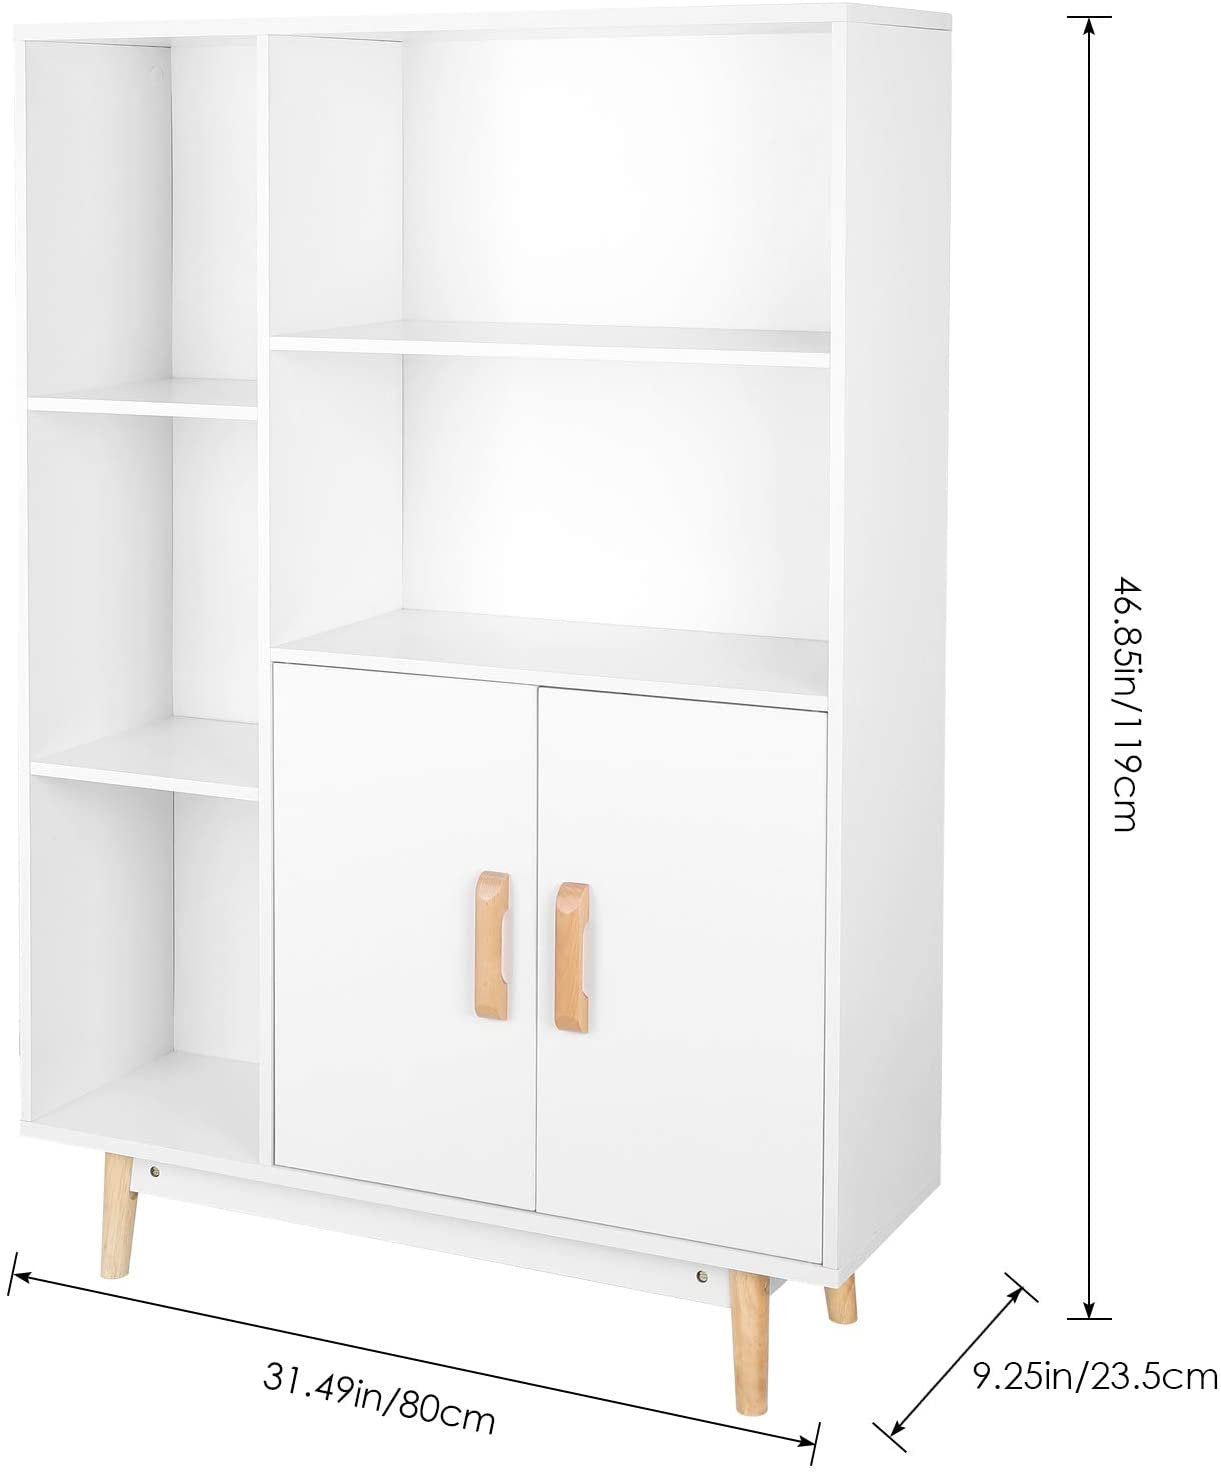 Oslo White Bookcase with Closed Storage